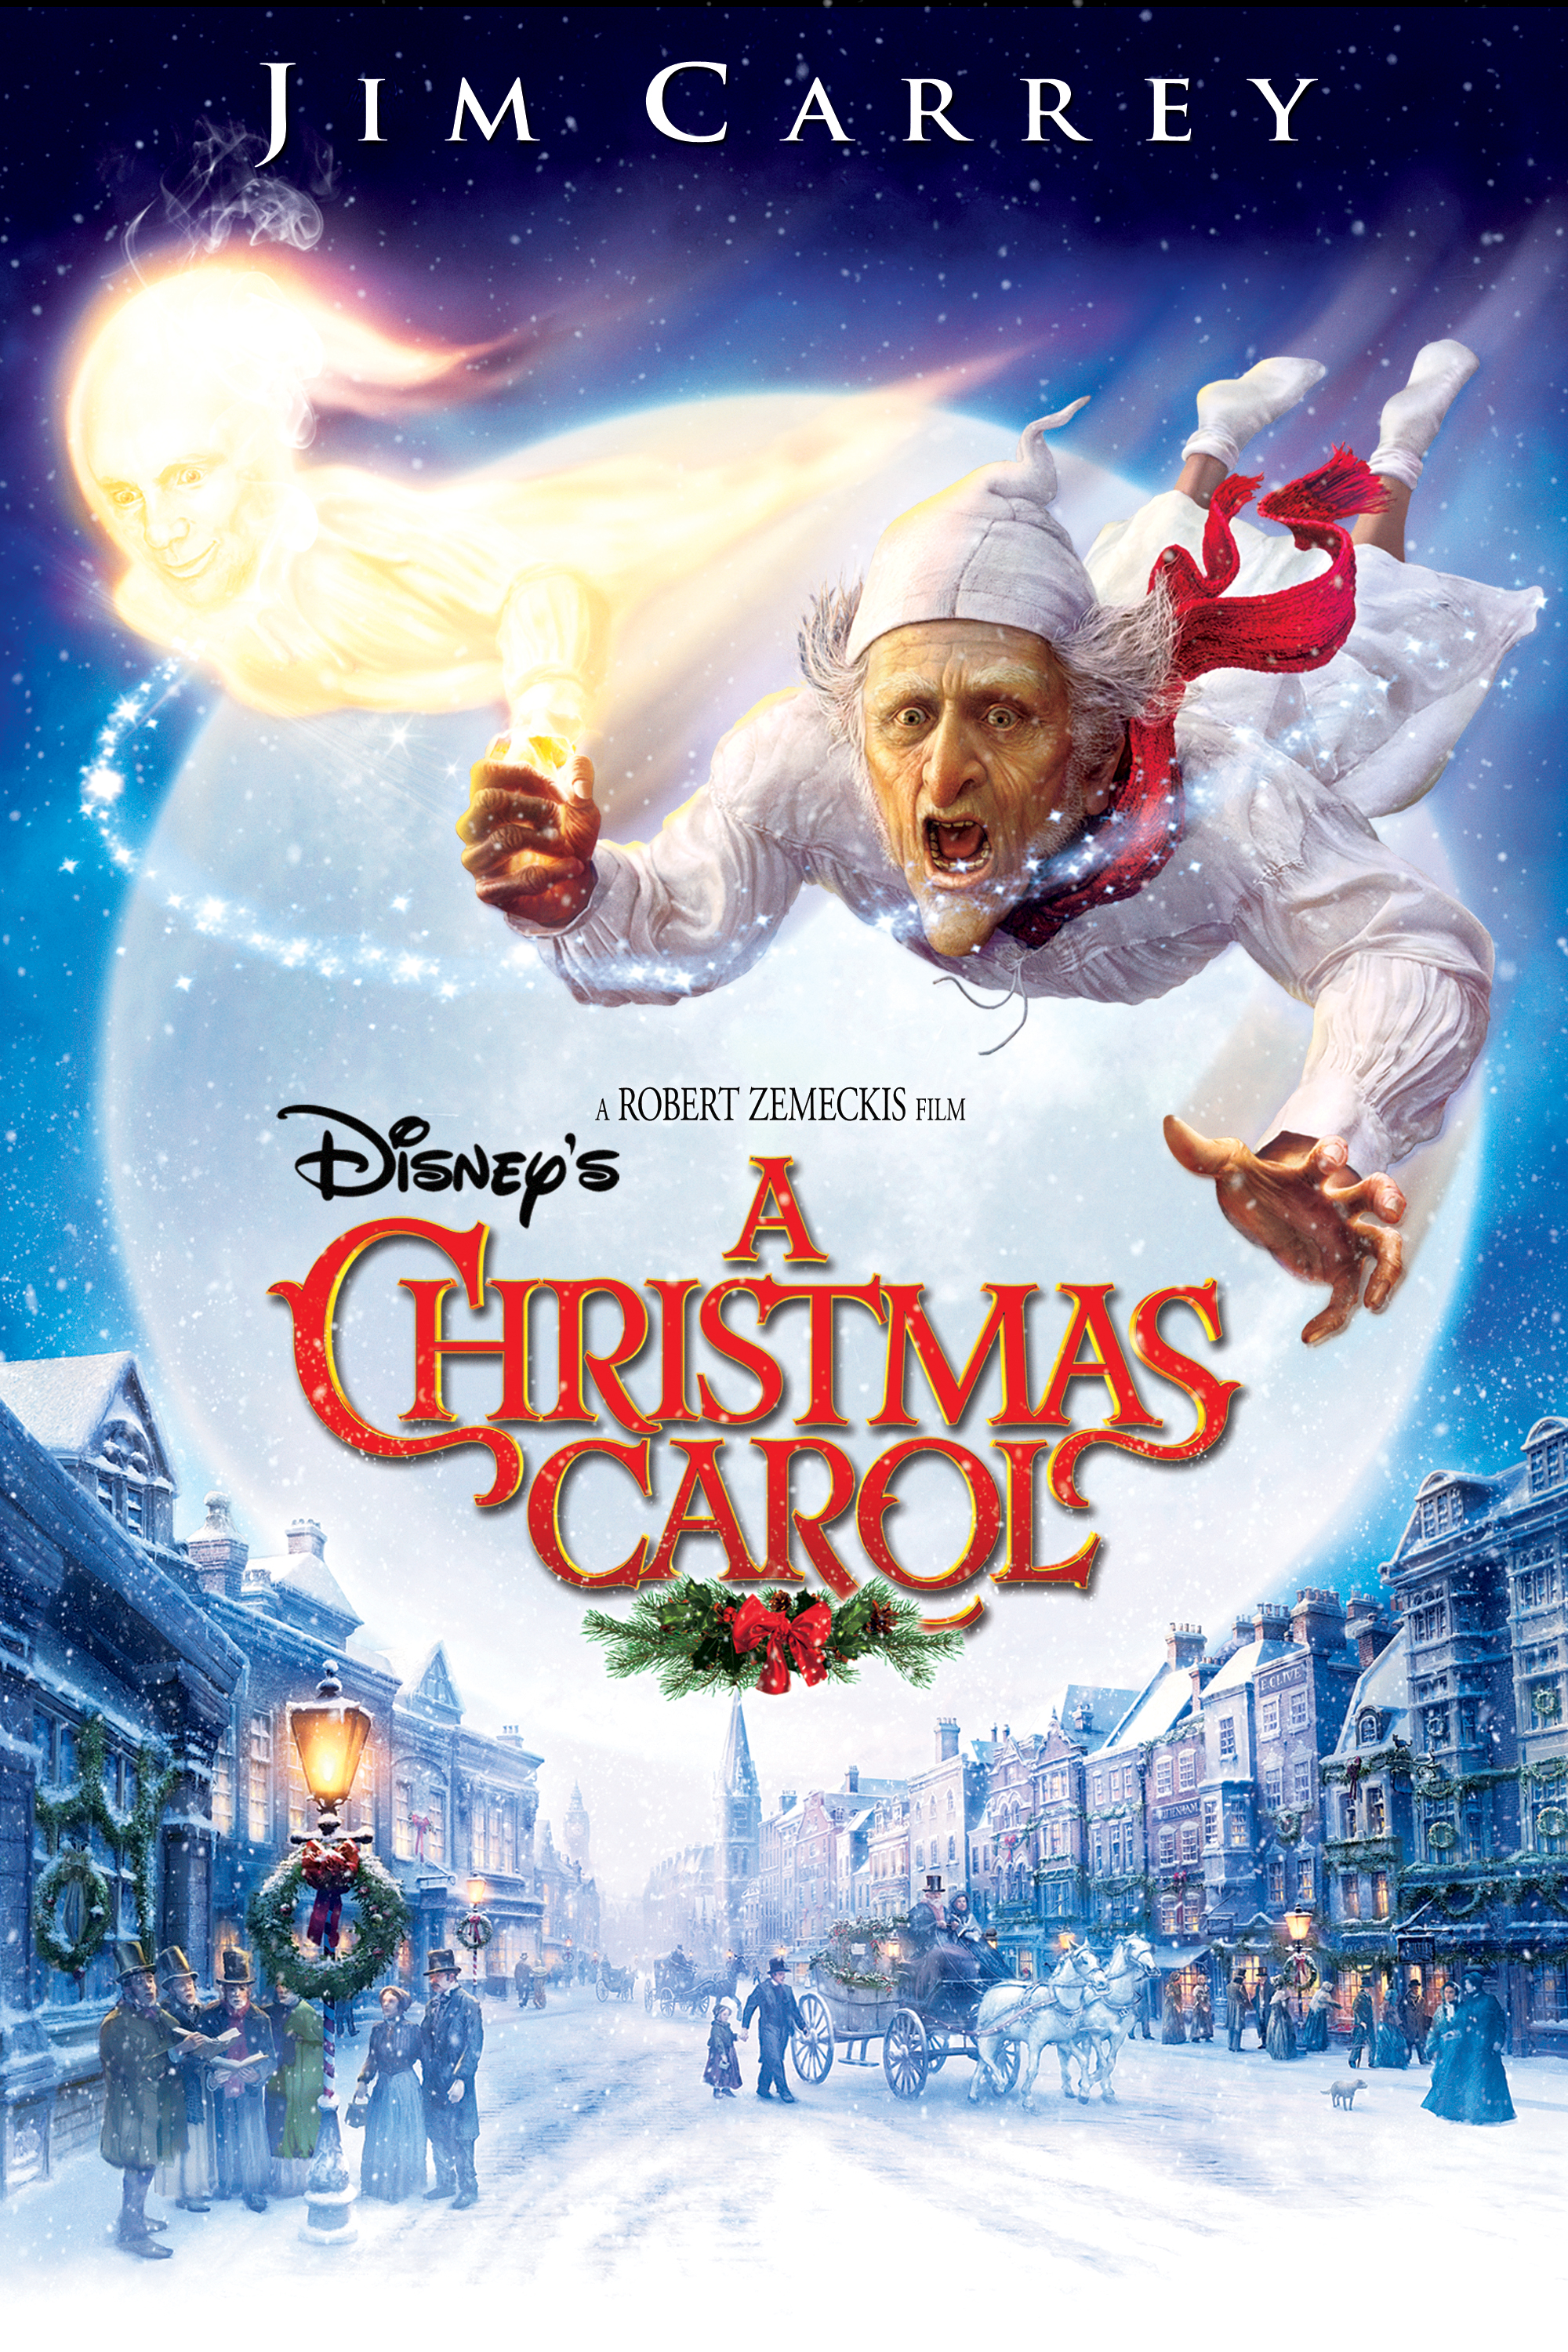 A Christmas Carol 2009 - Track 01 A Christmas Carol Main